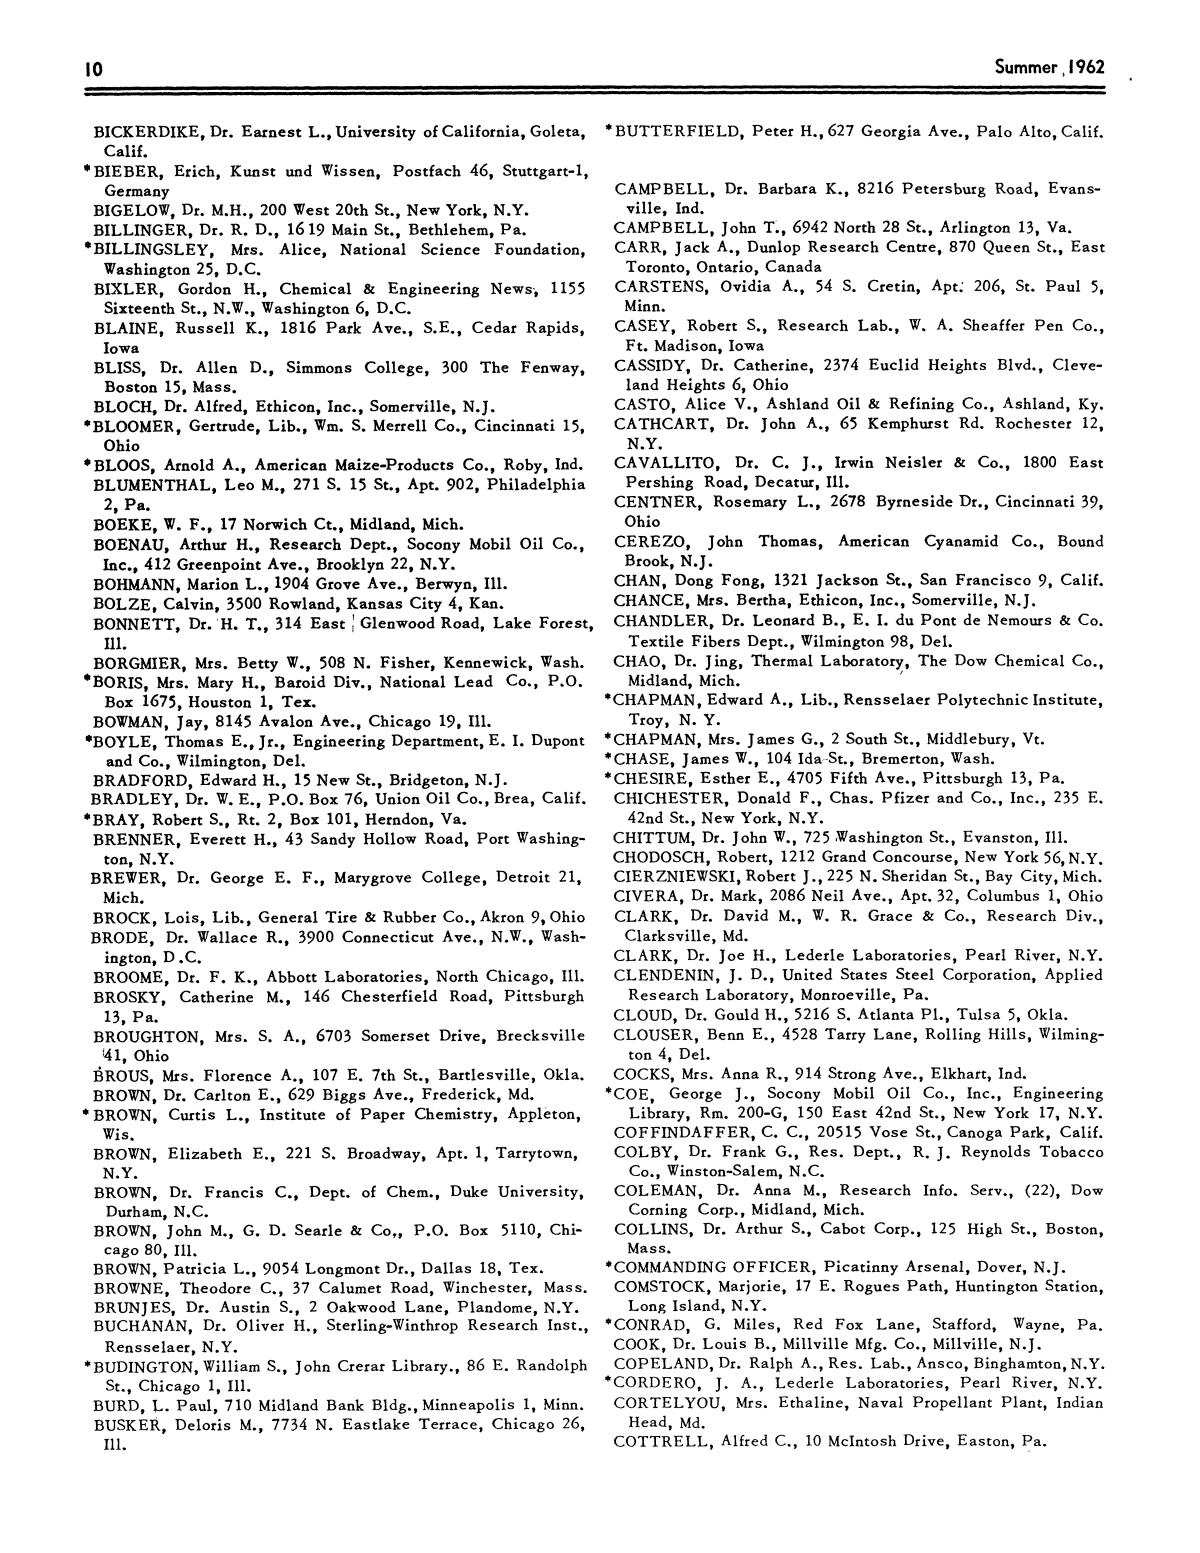 Chemical Literature, Volume 14, Number 2, Summer 1962
                                                
                                                    10
                                                